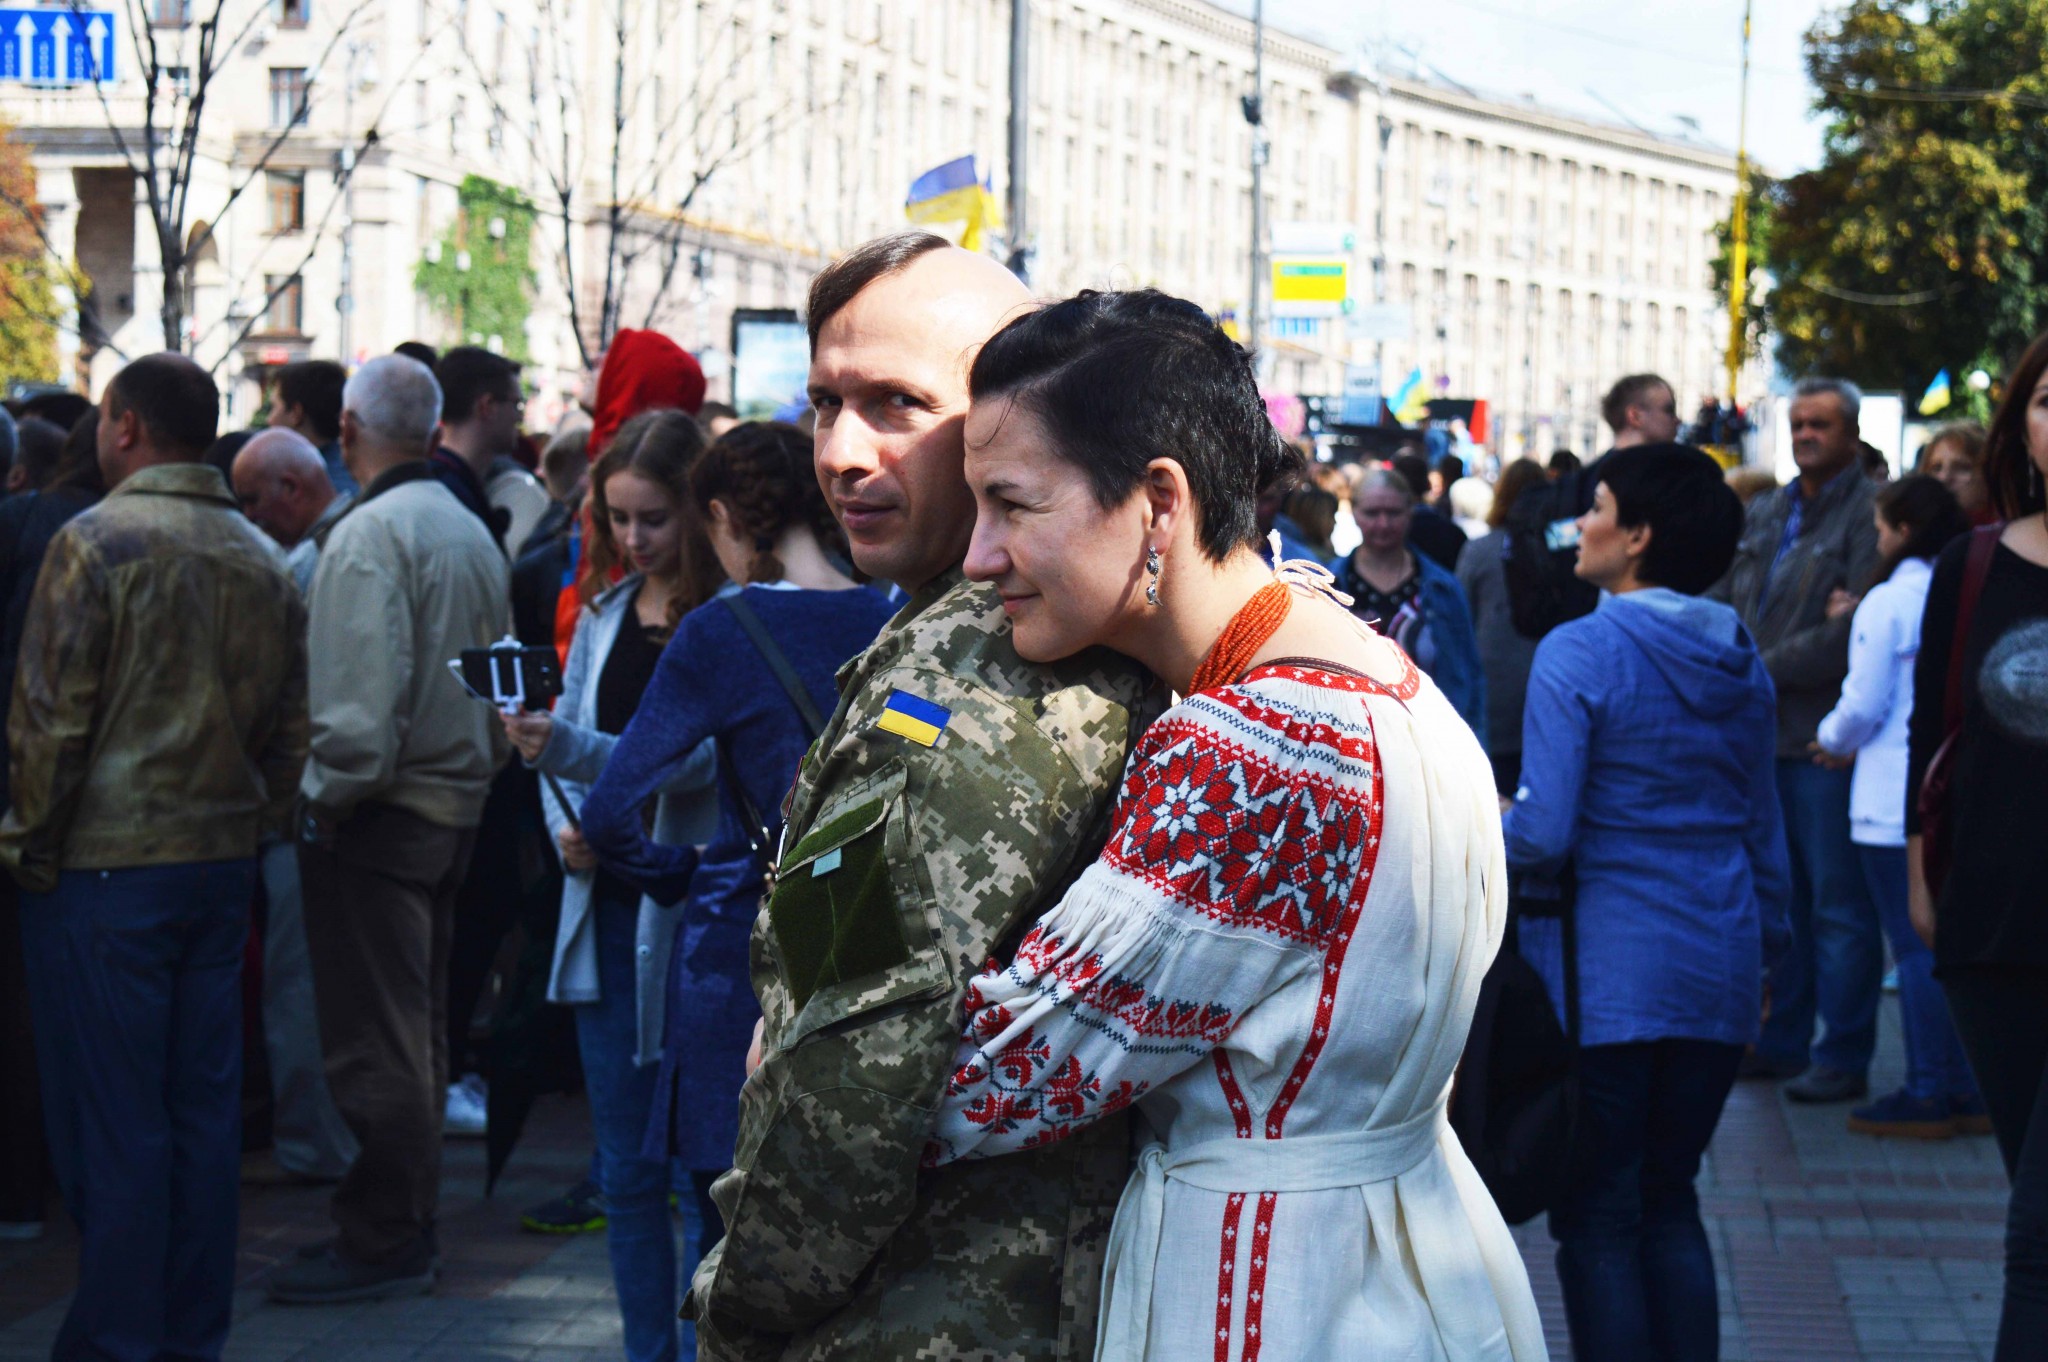 Ukrainians celebrate 26th anniversary of Independence | Photos